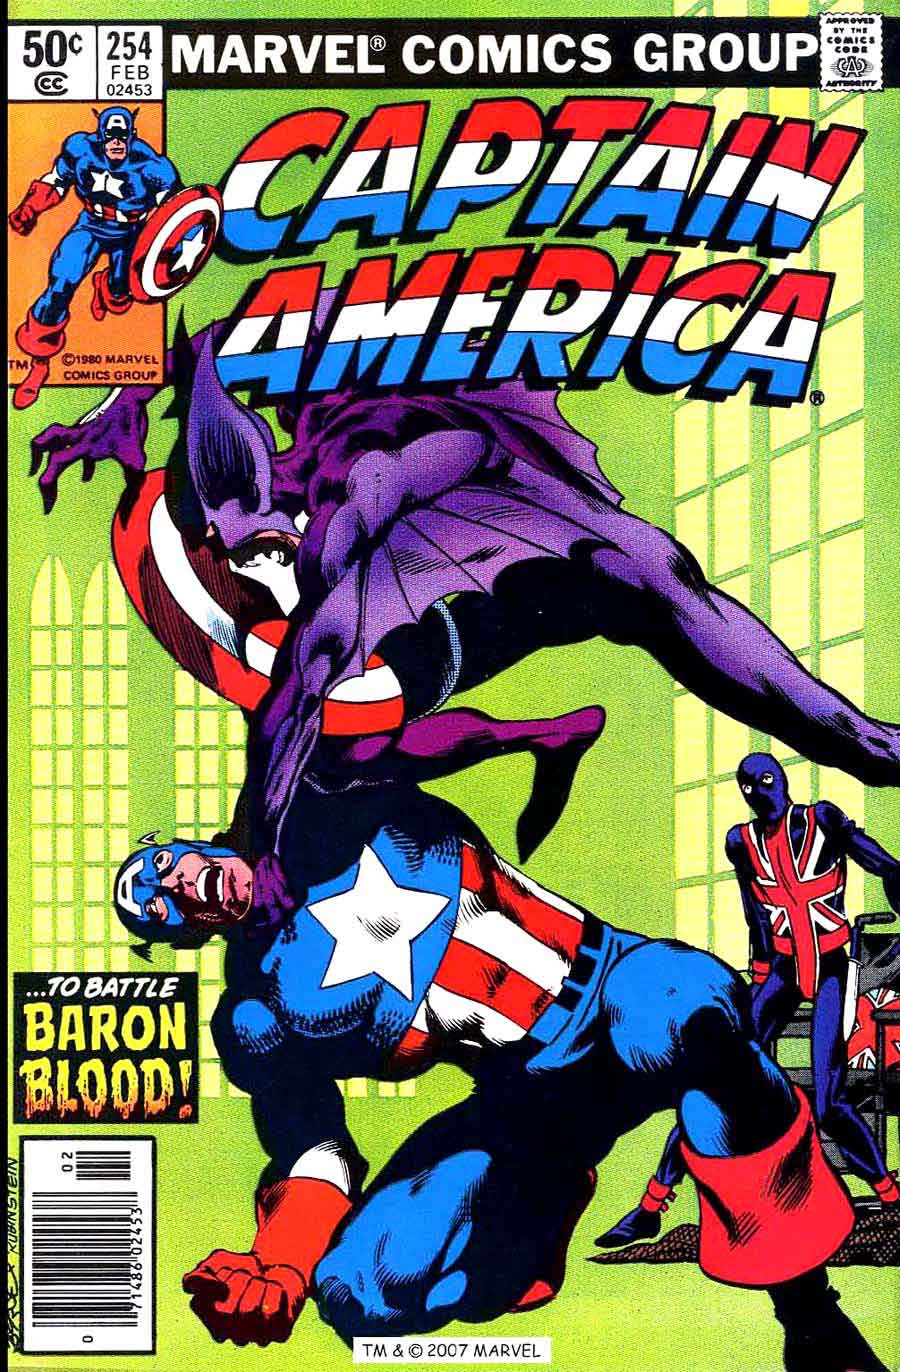 Captain America #254 marvel 1980s bronze age comic book cover art by John Byrne